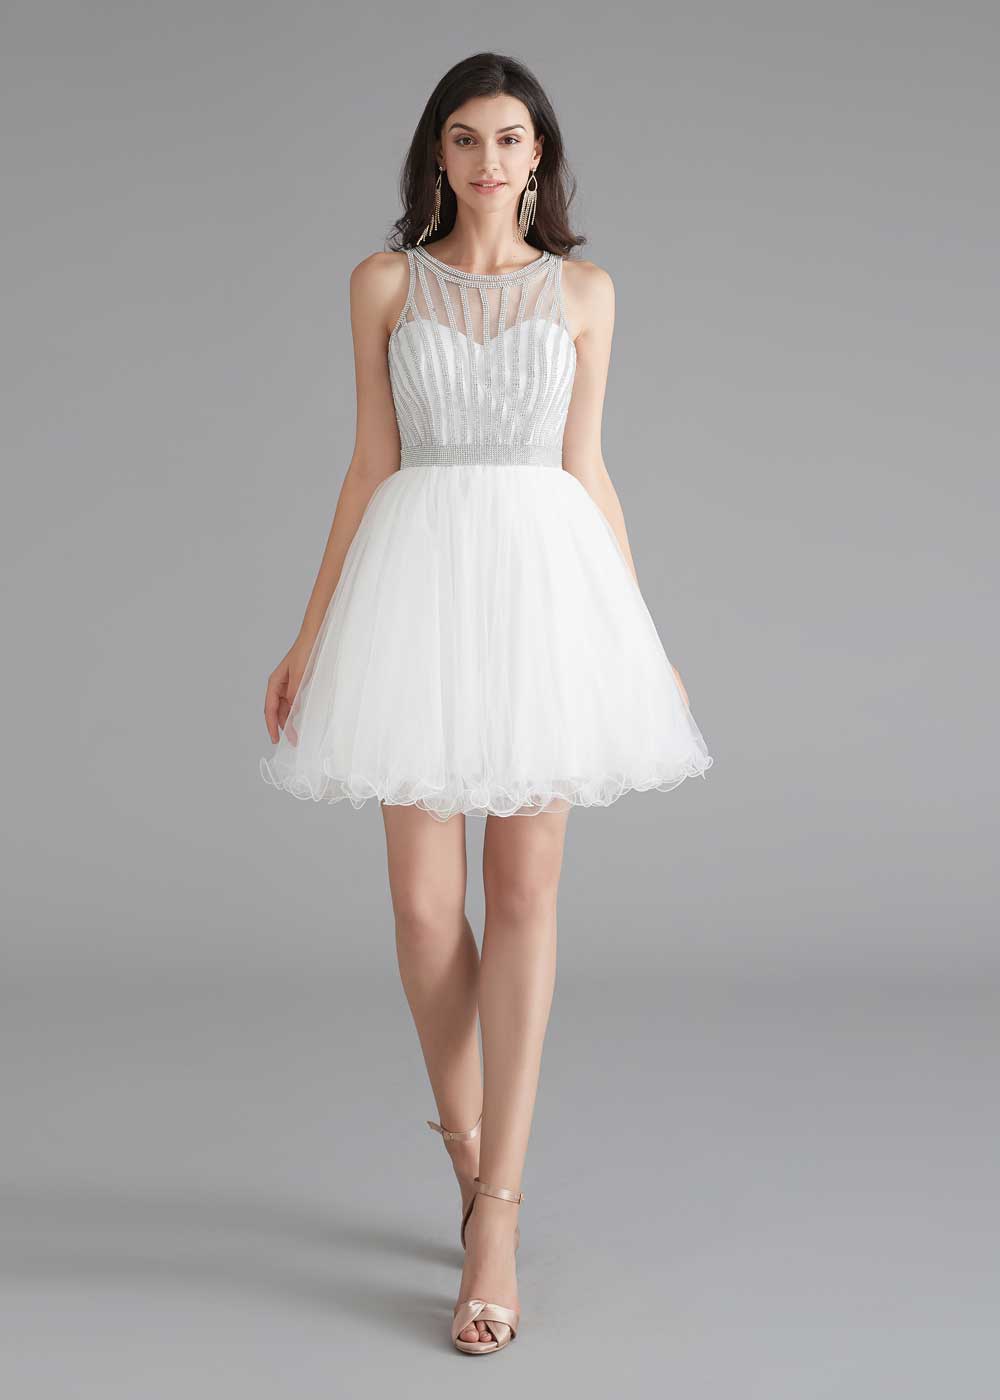 Chic Short White Tulle Evening Dress – JoJo Shop